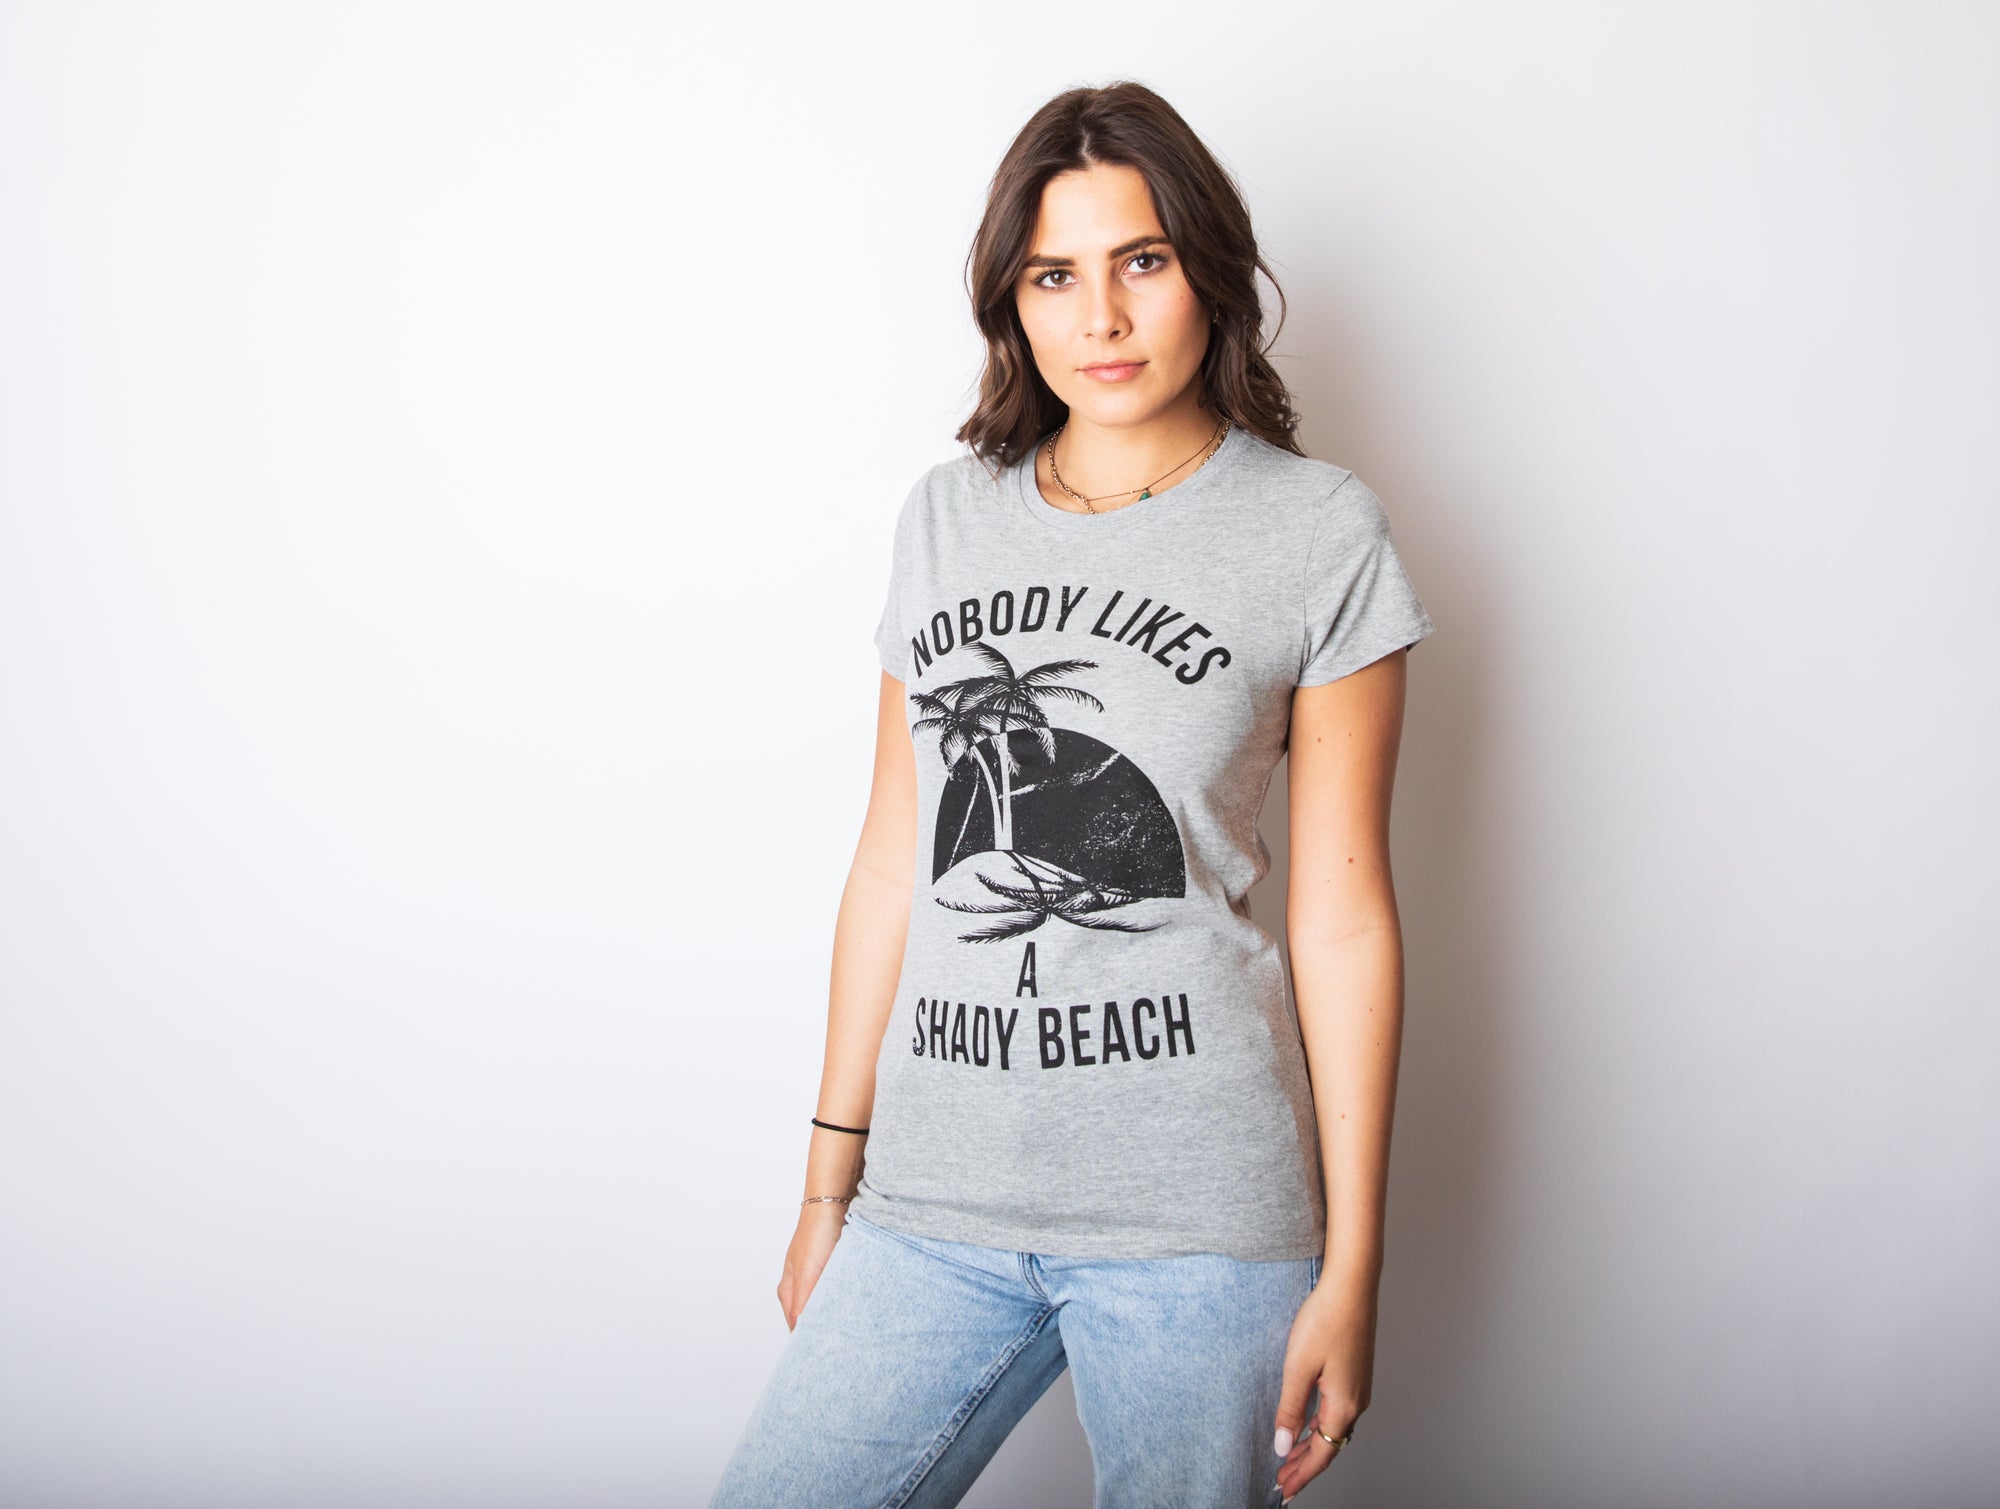 LinaStudioDesign Funny Beach Shirt, Summer Shirt for Women and Men, If Crabby Please Return to Beach Shirt, Vacation Tee, Beach Shirt, Animal Lover Shirt